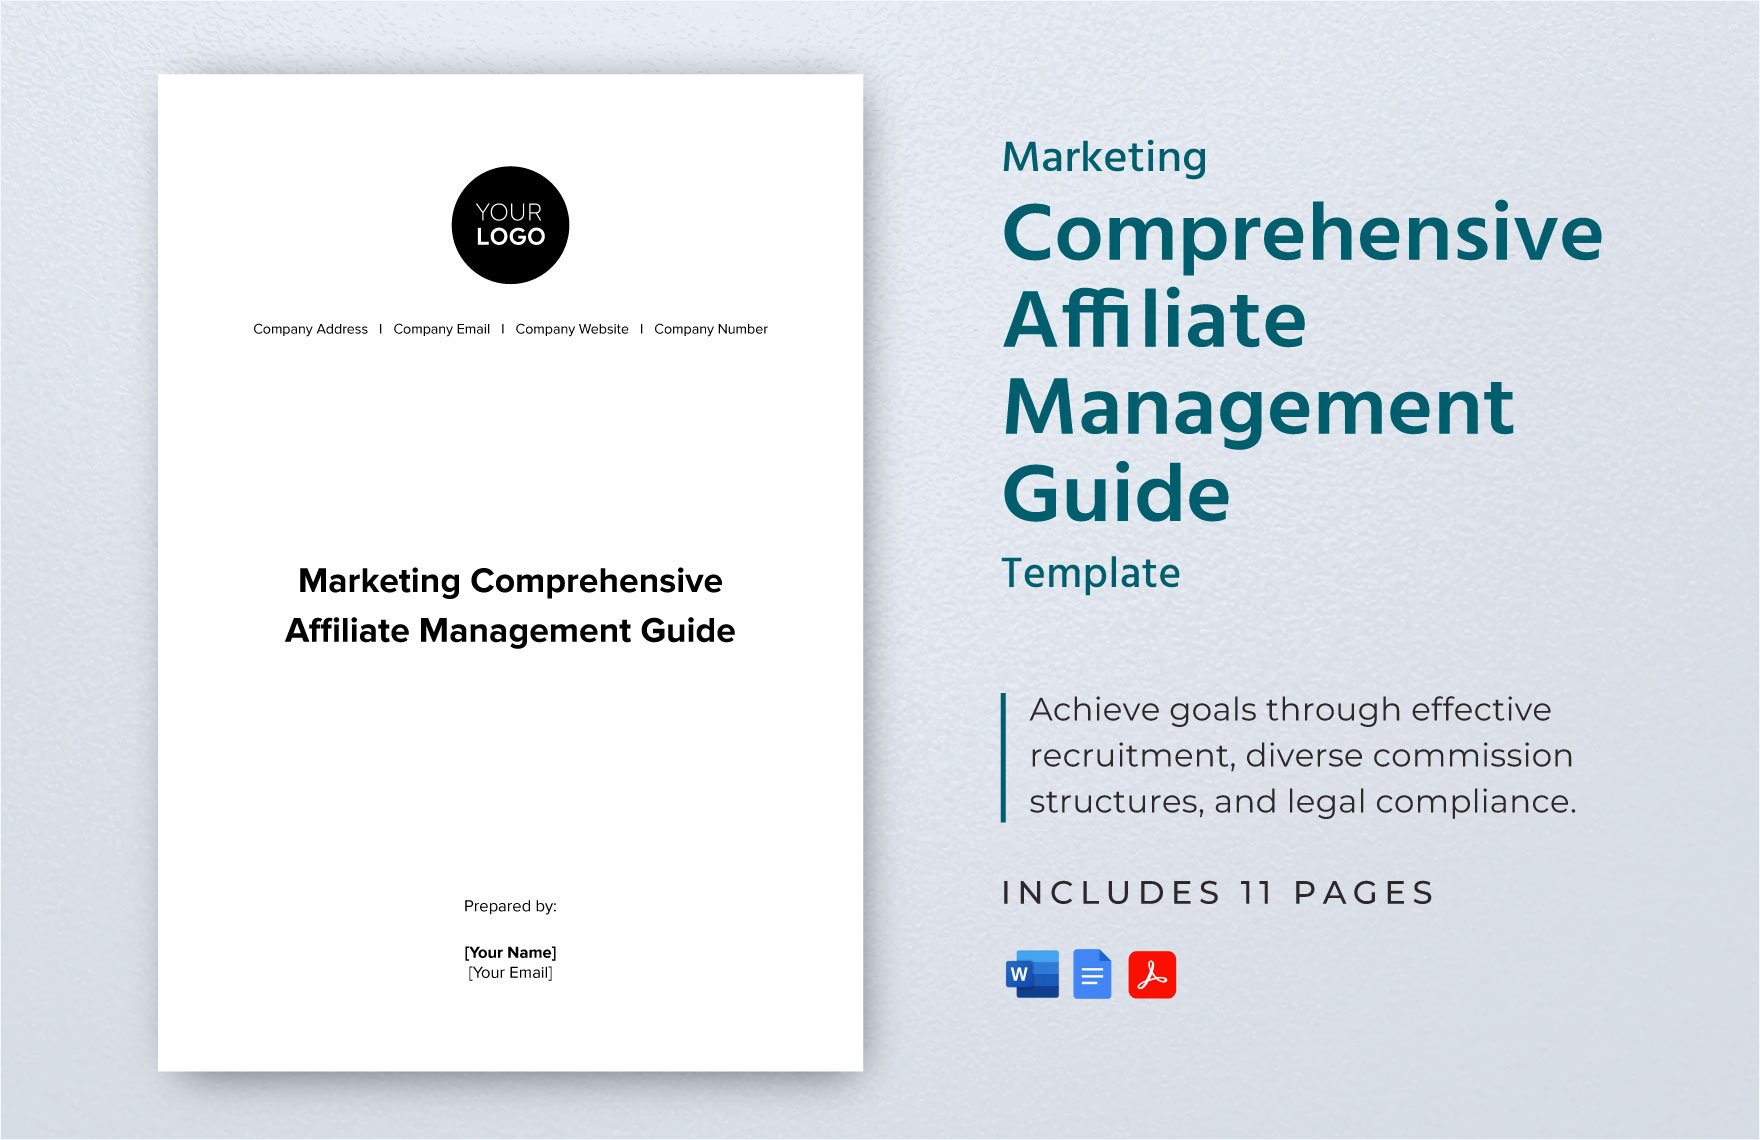 Marketing Comprehensive Affiliate Management Guide Template in Word, Google Docs, PDF